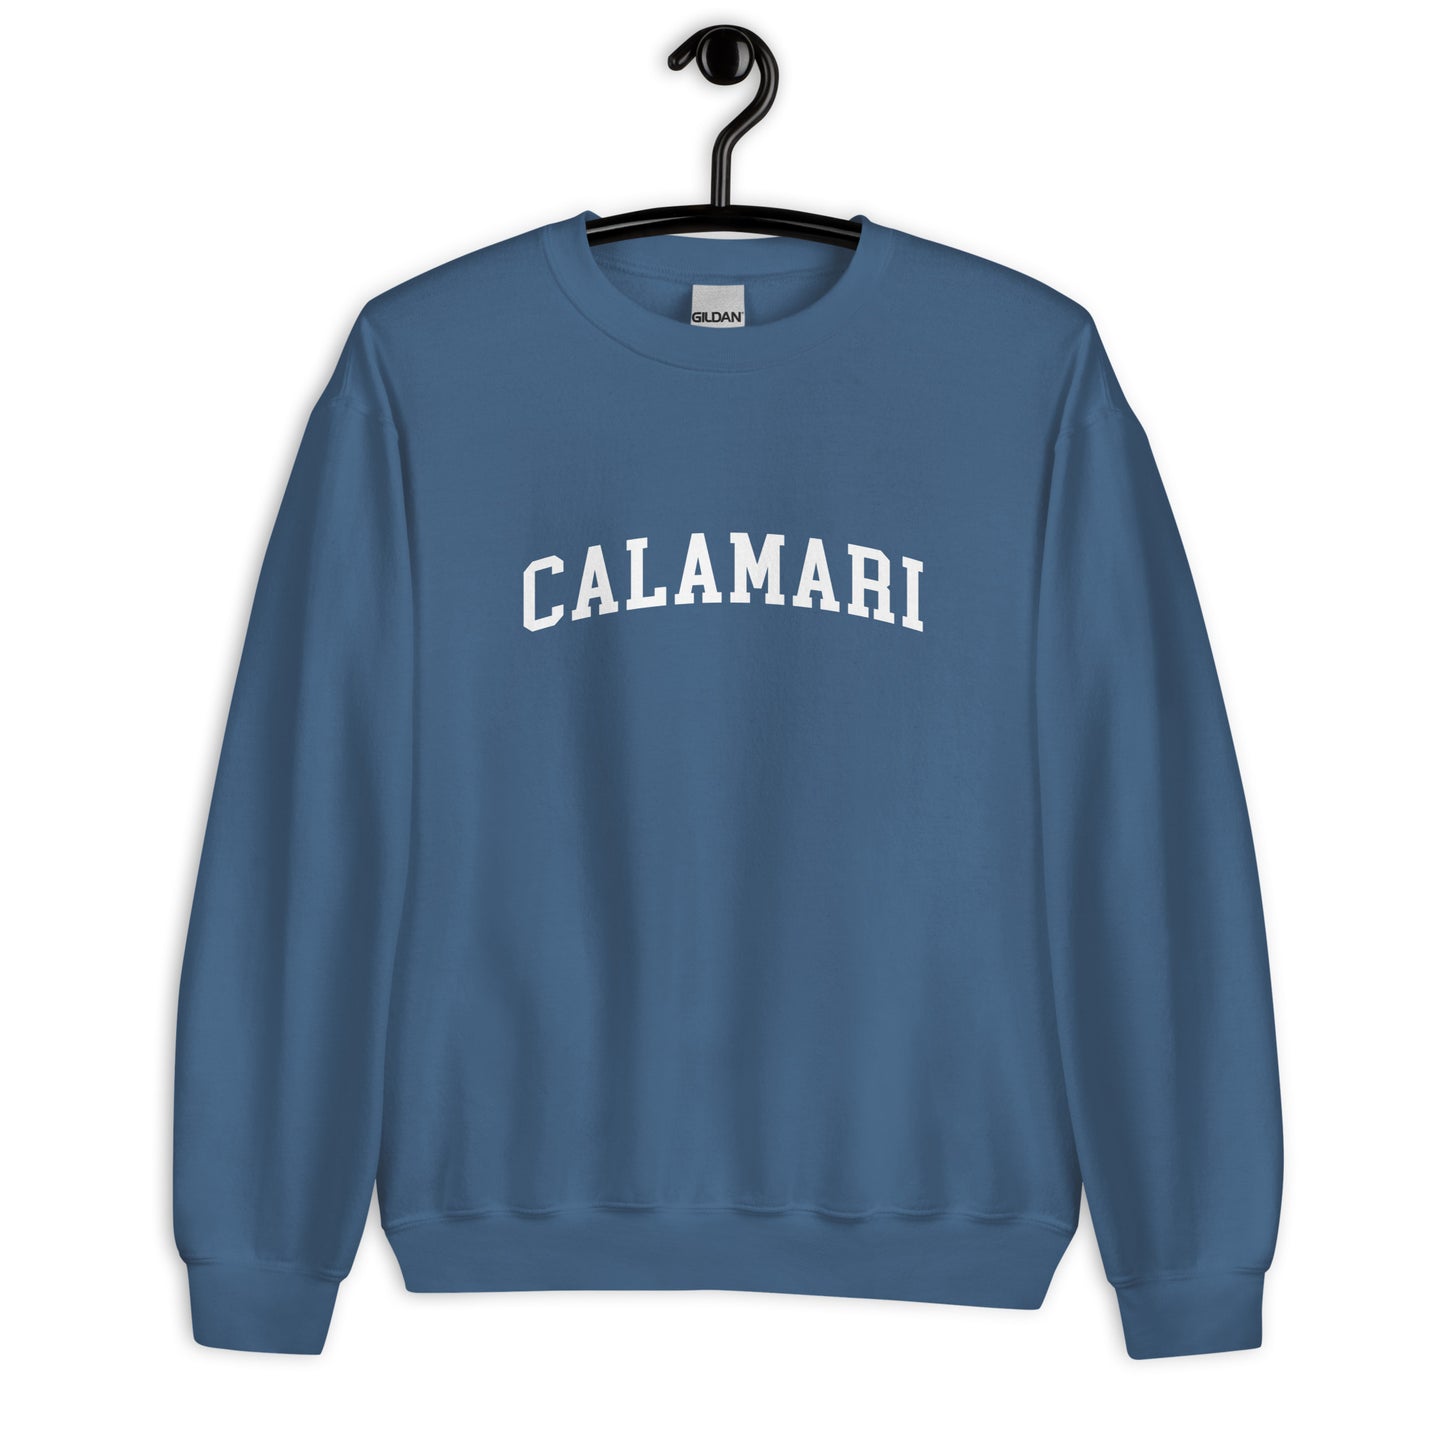 Calamari Sweatshirt - Arched Font